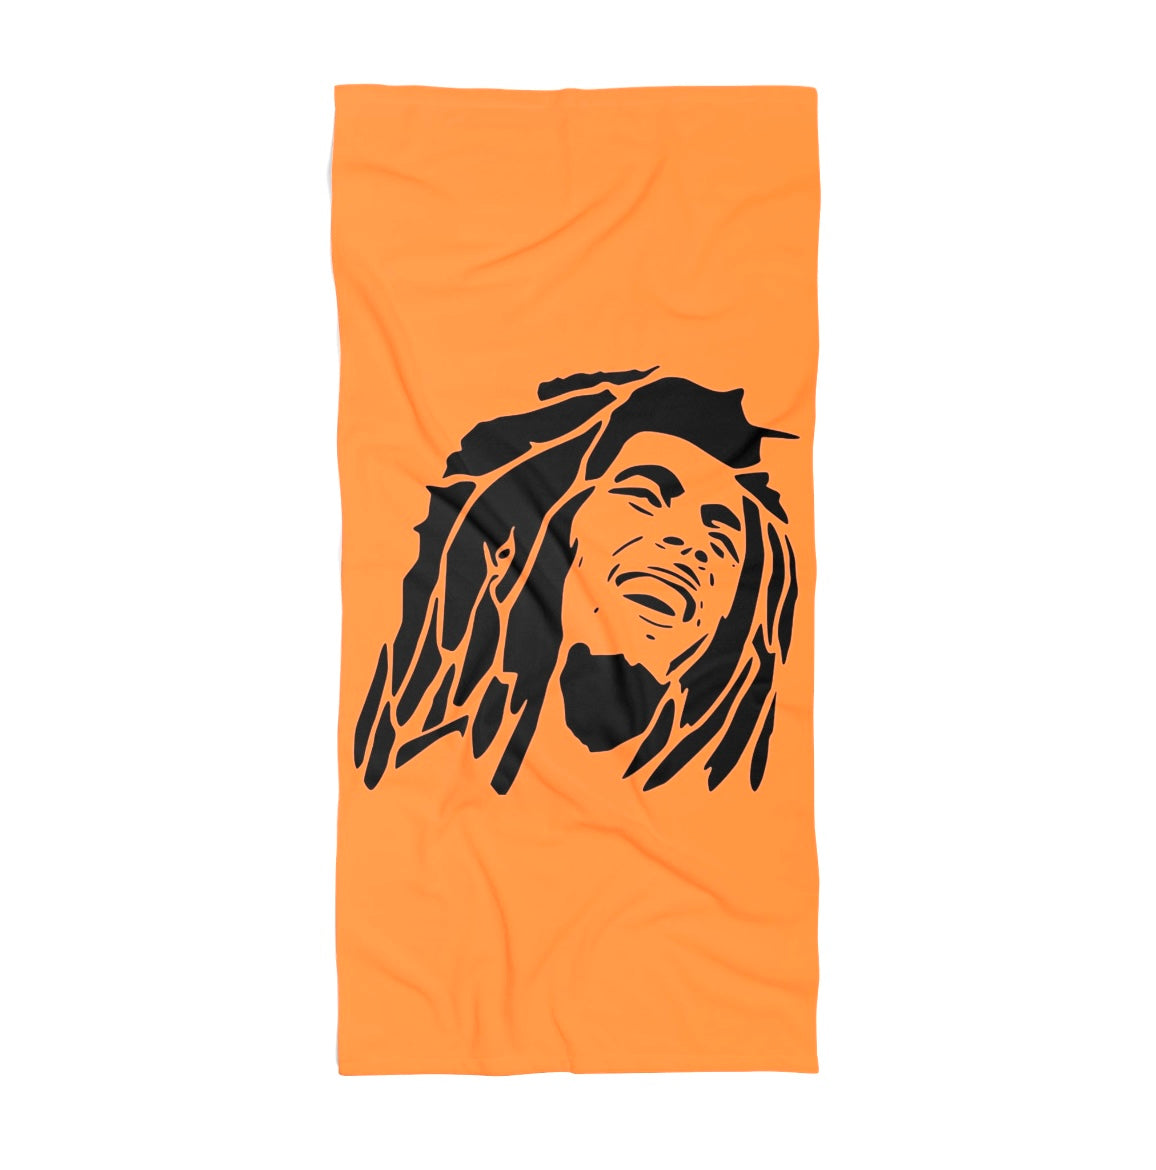 Bob Marley Beach Towel